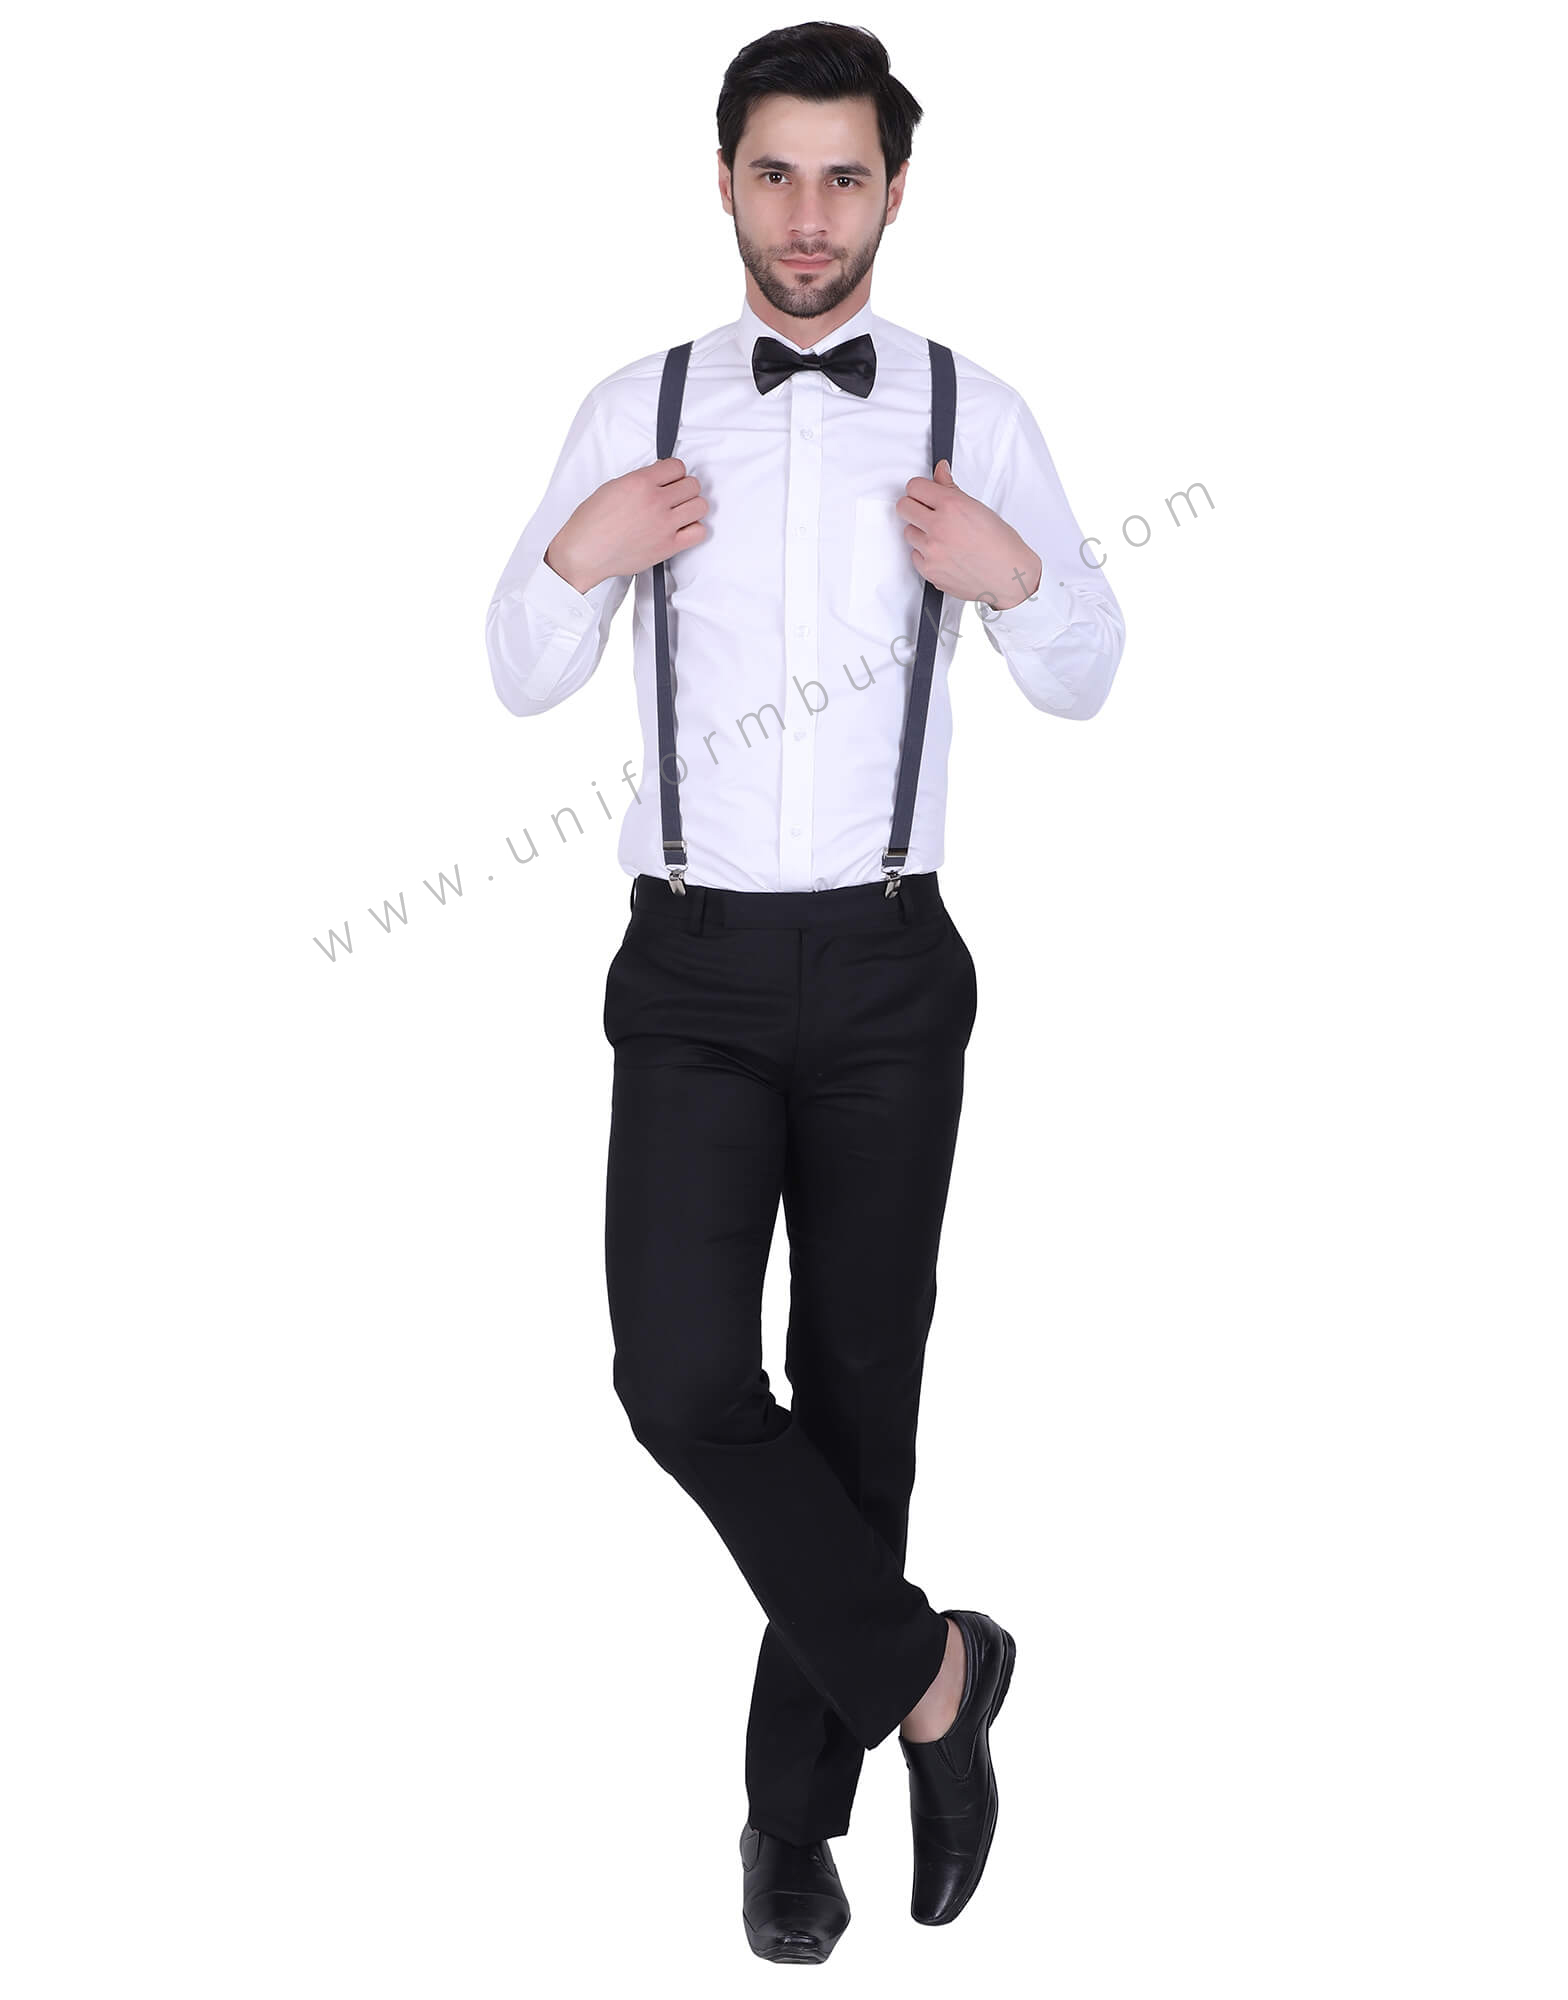 Men's 2-Inch Side Clip Suspenders - Black, Tan and Navy